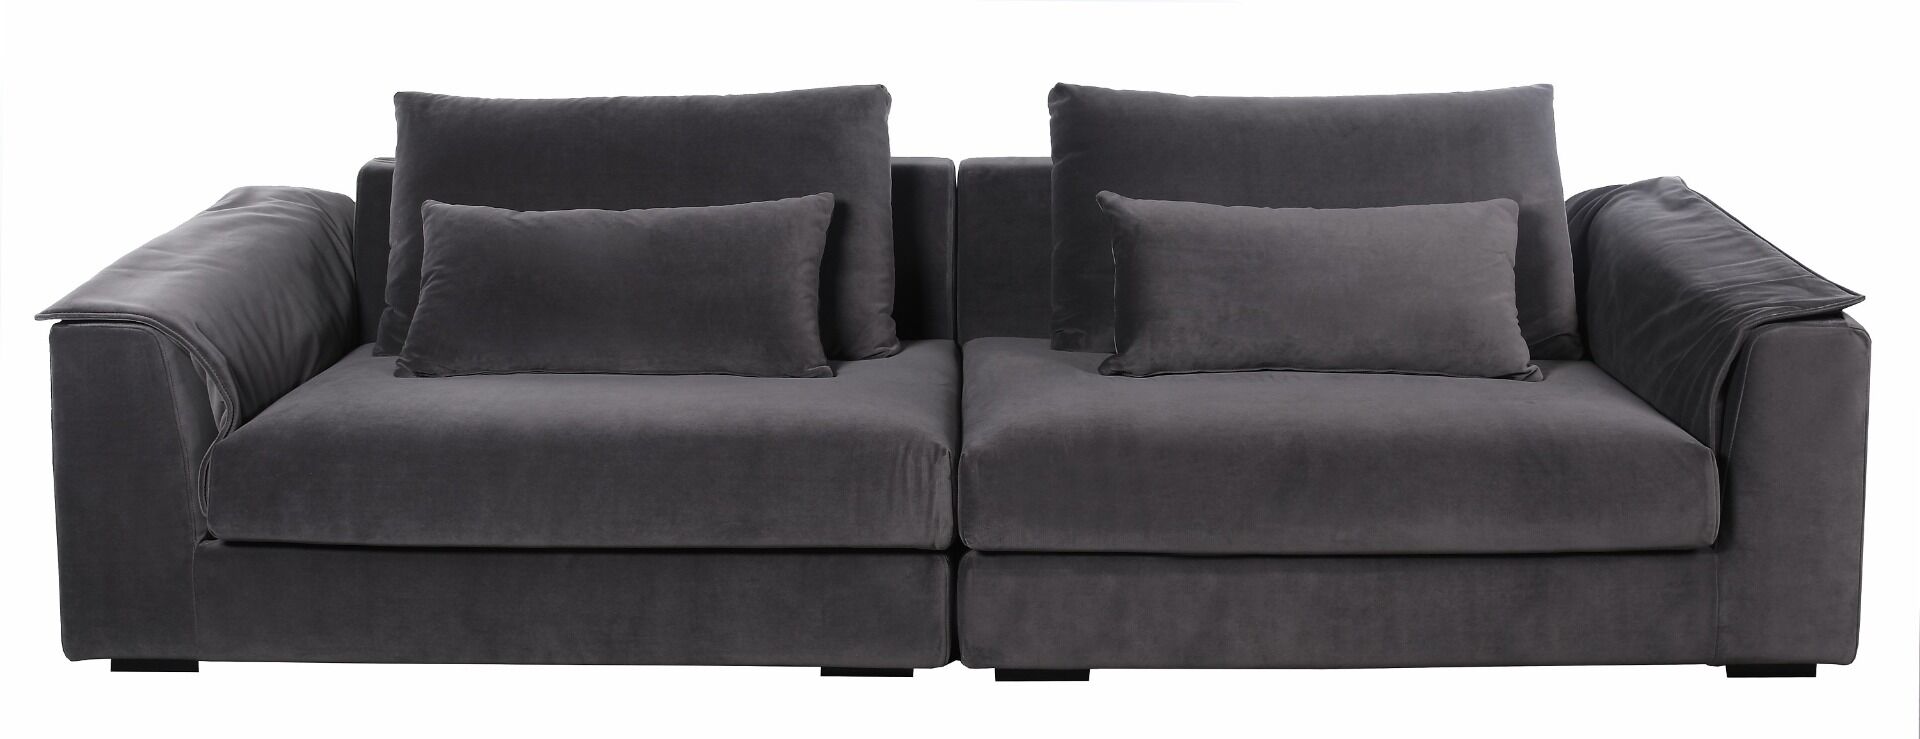 Sofa 4 osobowa Cubus 280x100x71 cm